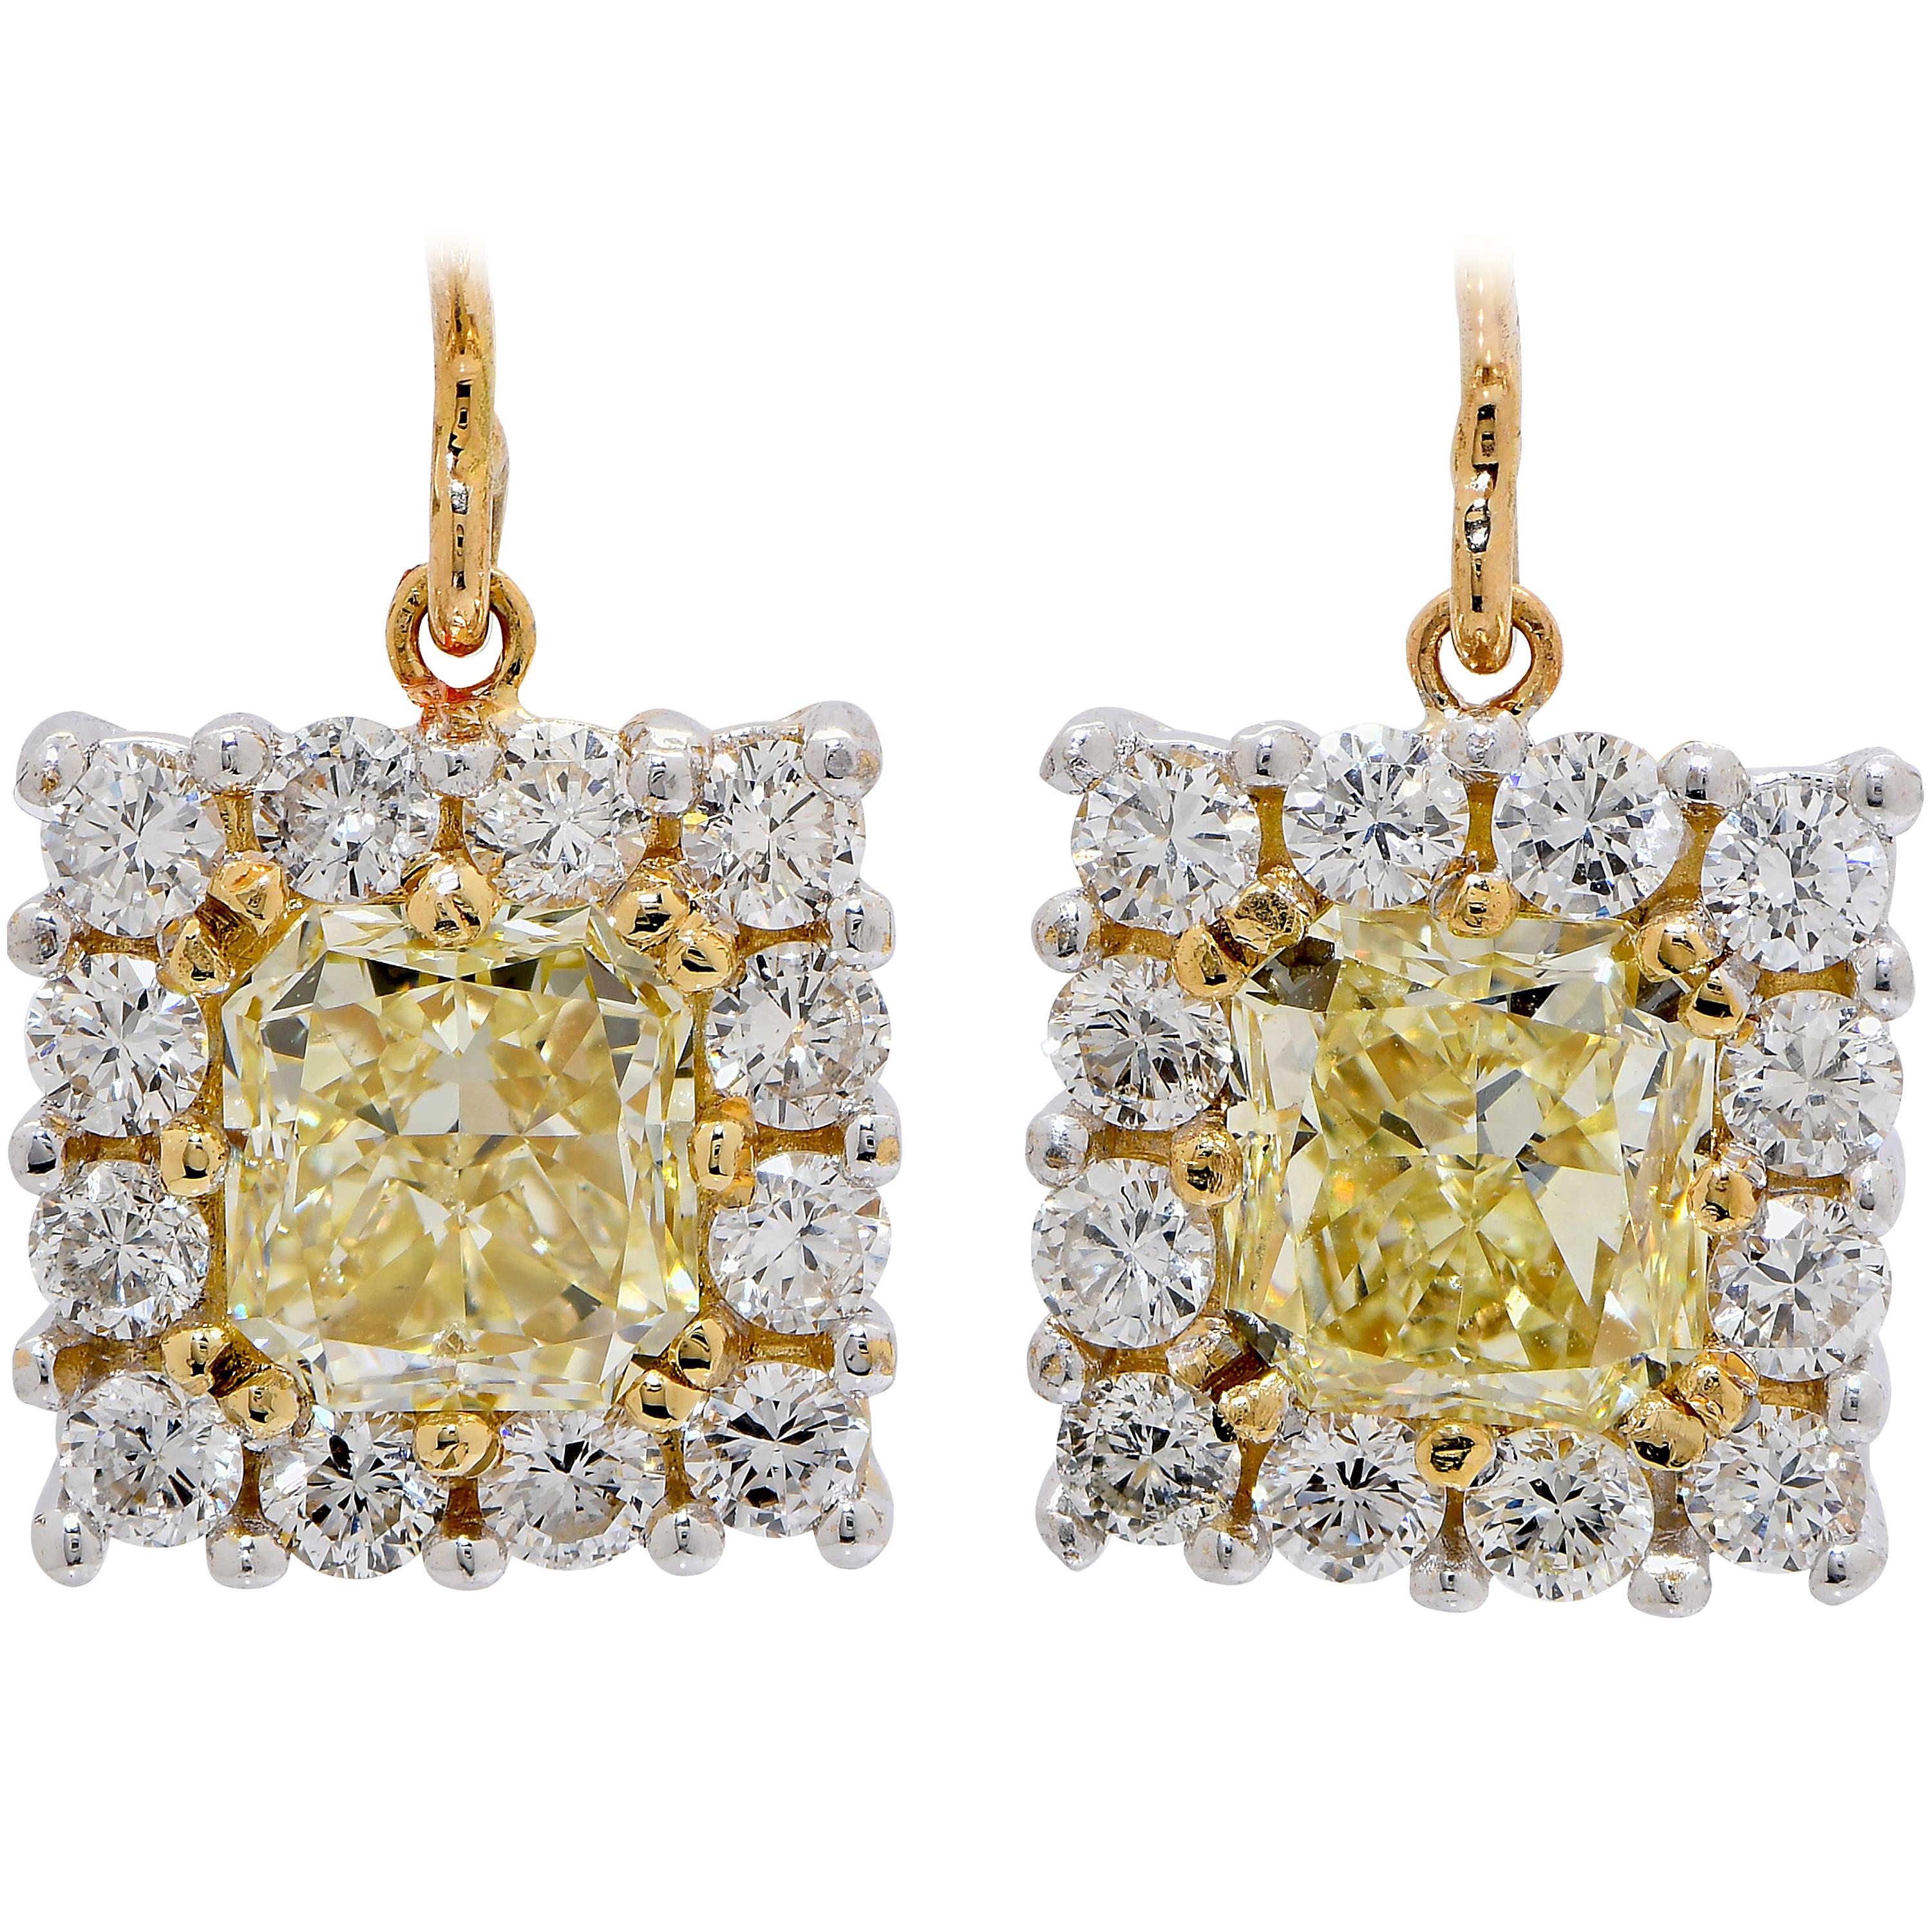 4.15 Carat Yellow and White Diamond Drop Earrings in 18 Carat Yellow Gold